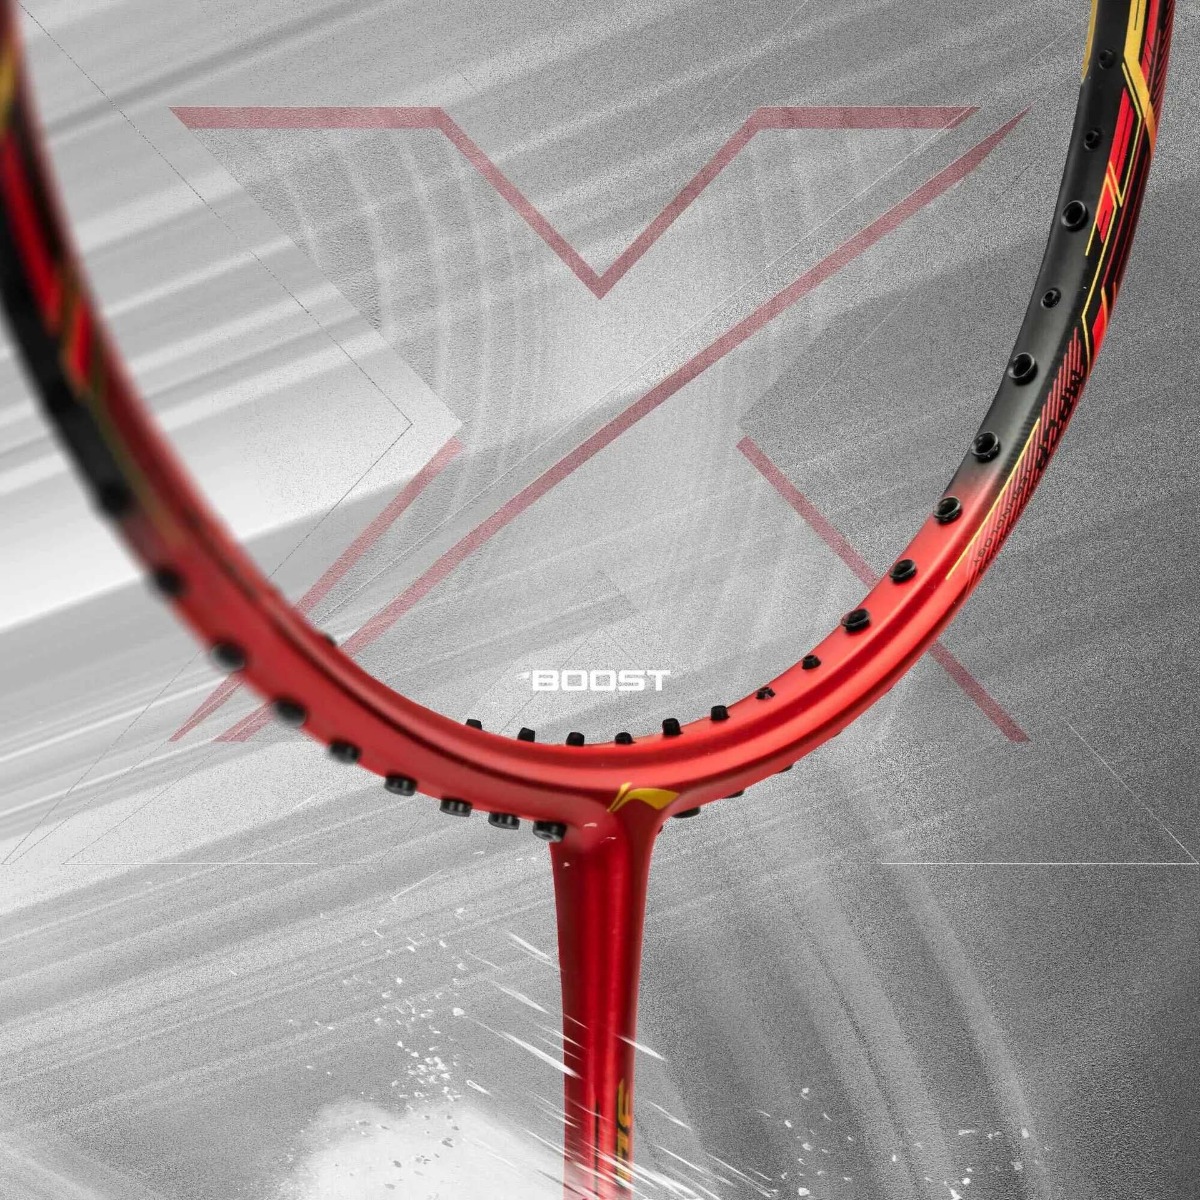 Li-Ning 3D Calibar X Boost Badminton Racket Features High Tech Geometric Design